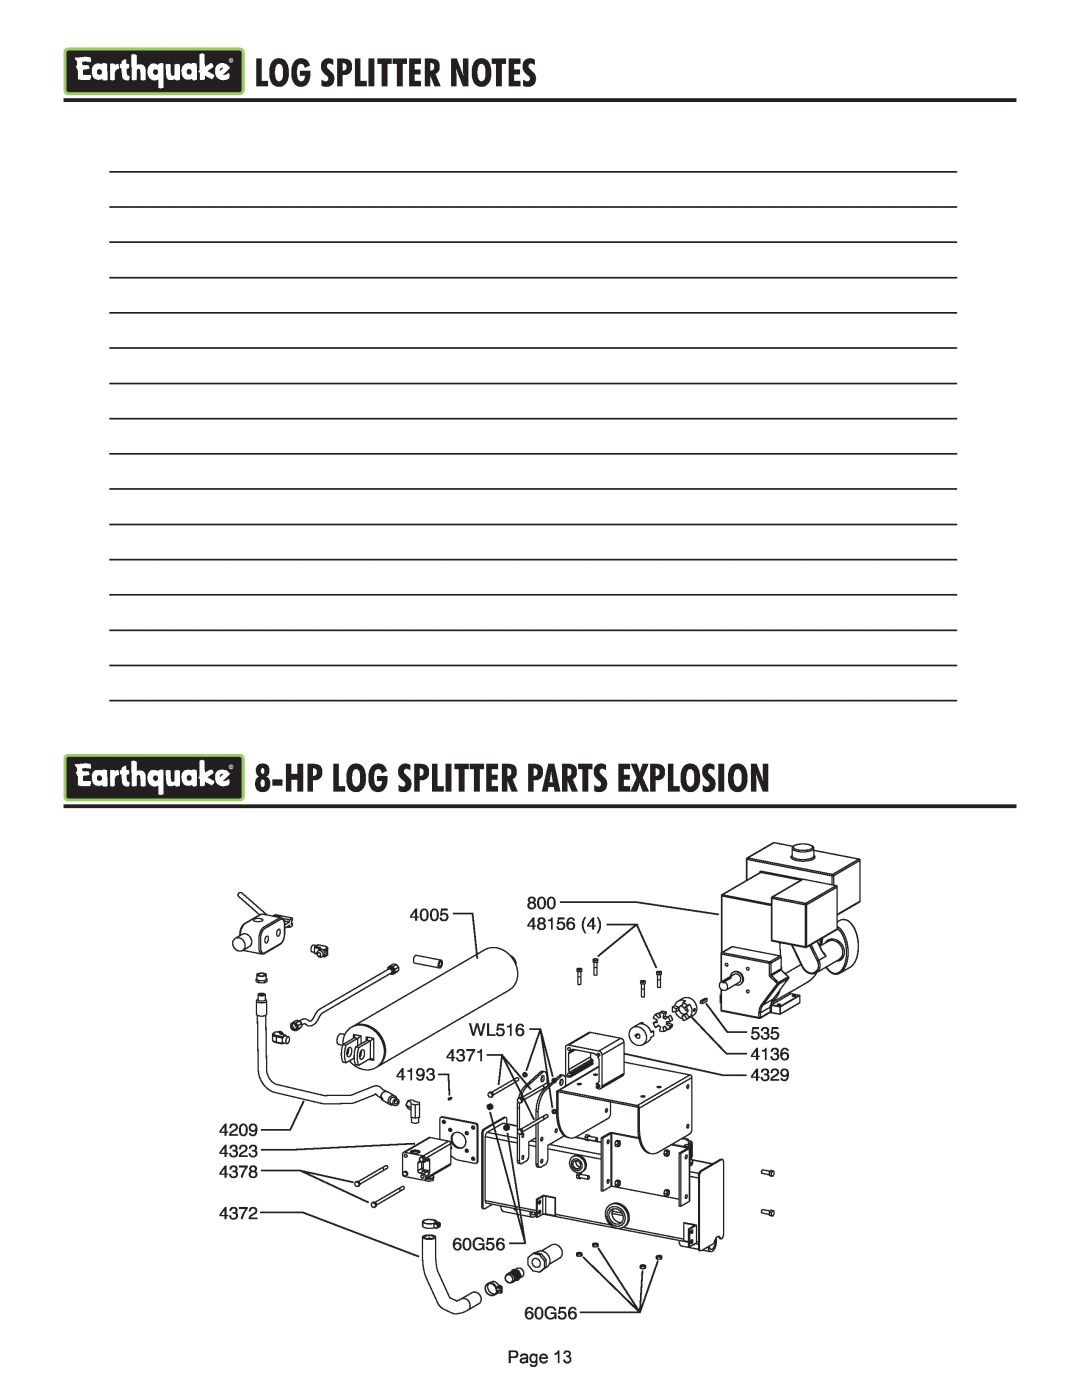 EarthQuake W2265, W2808 operating instructions Log Splitter Notes, Hplog Splitter Parts Explosion 